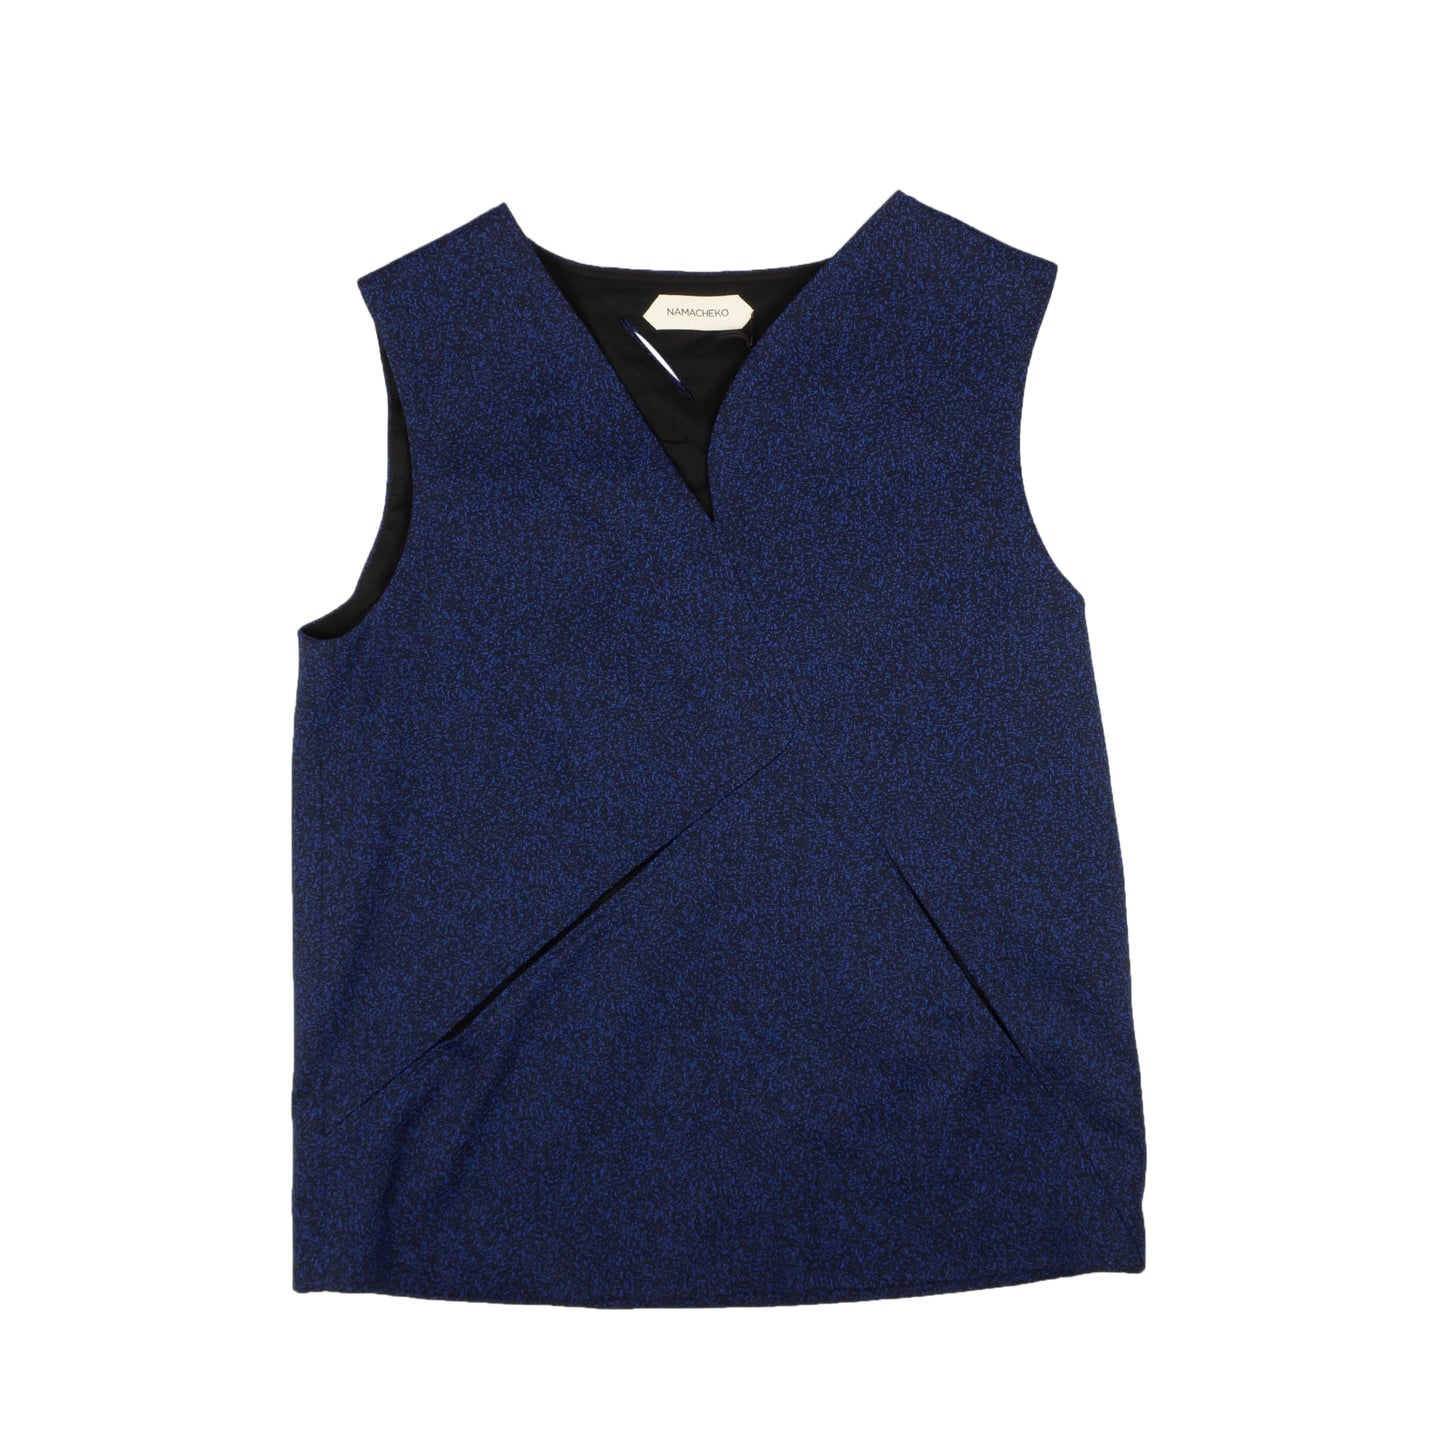 Namcheko Tasebar Sweater Vest -  Black/Blue